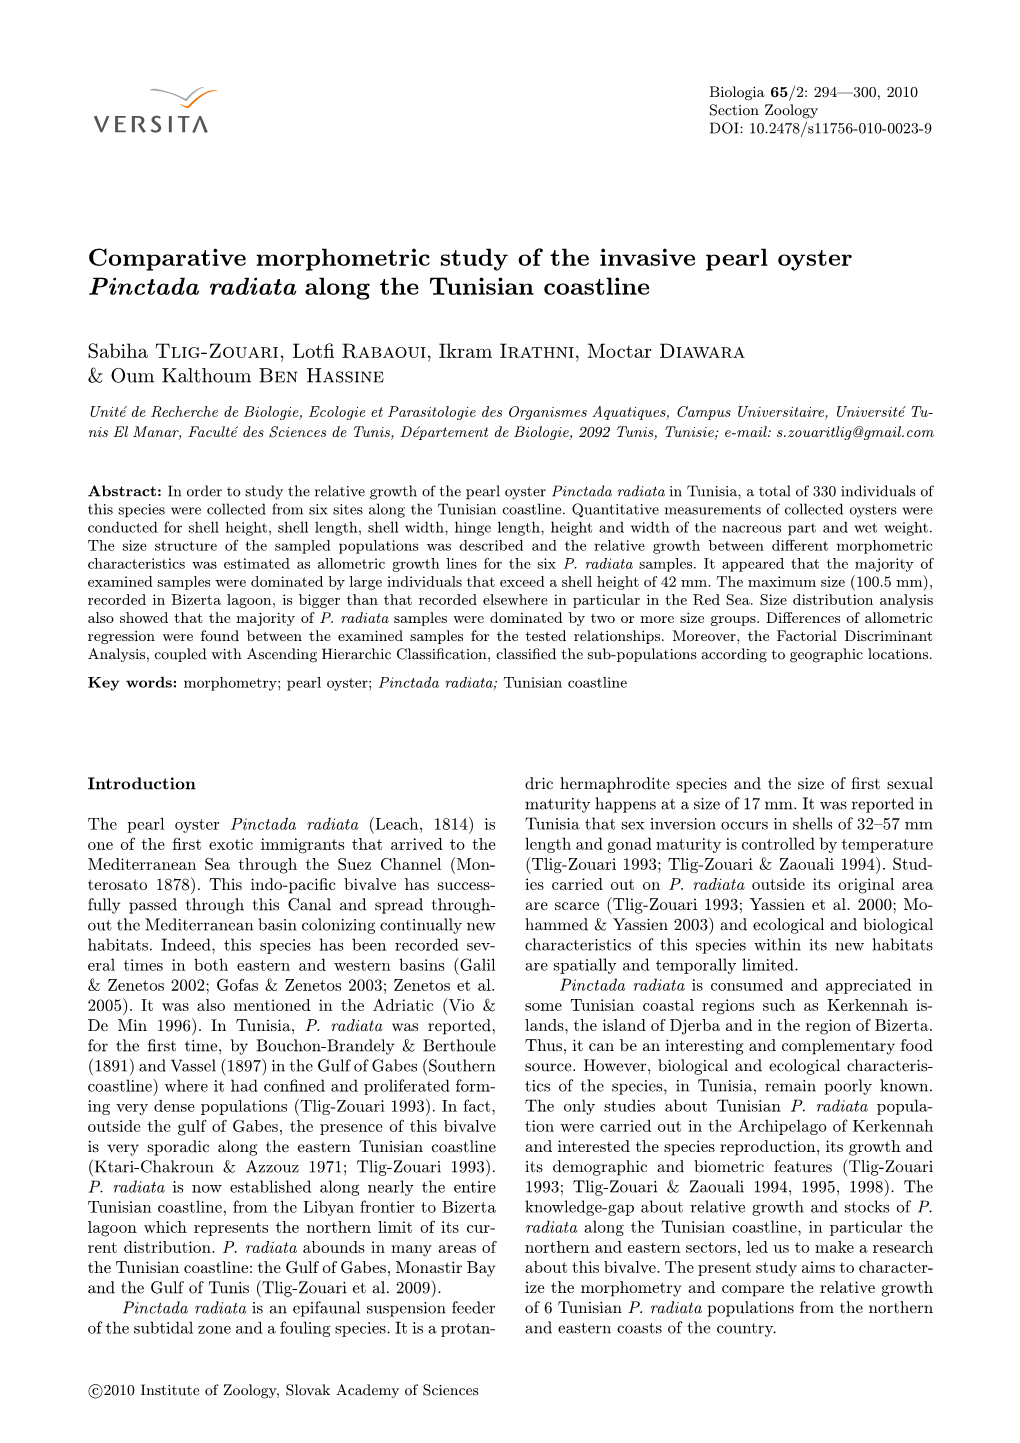 Comparative Morphometric Study of the Invasive Pearl Oyster Pinctada Radiata Along the Tunisian Coastline